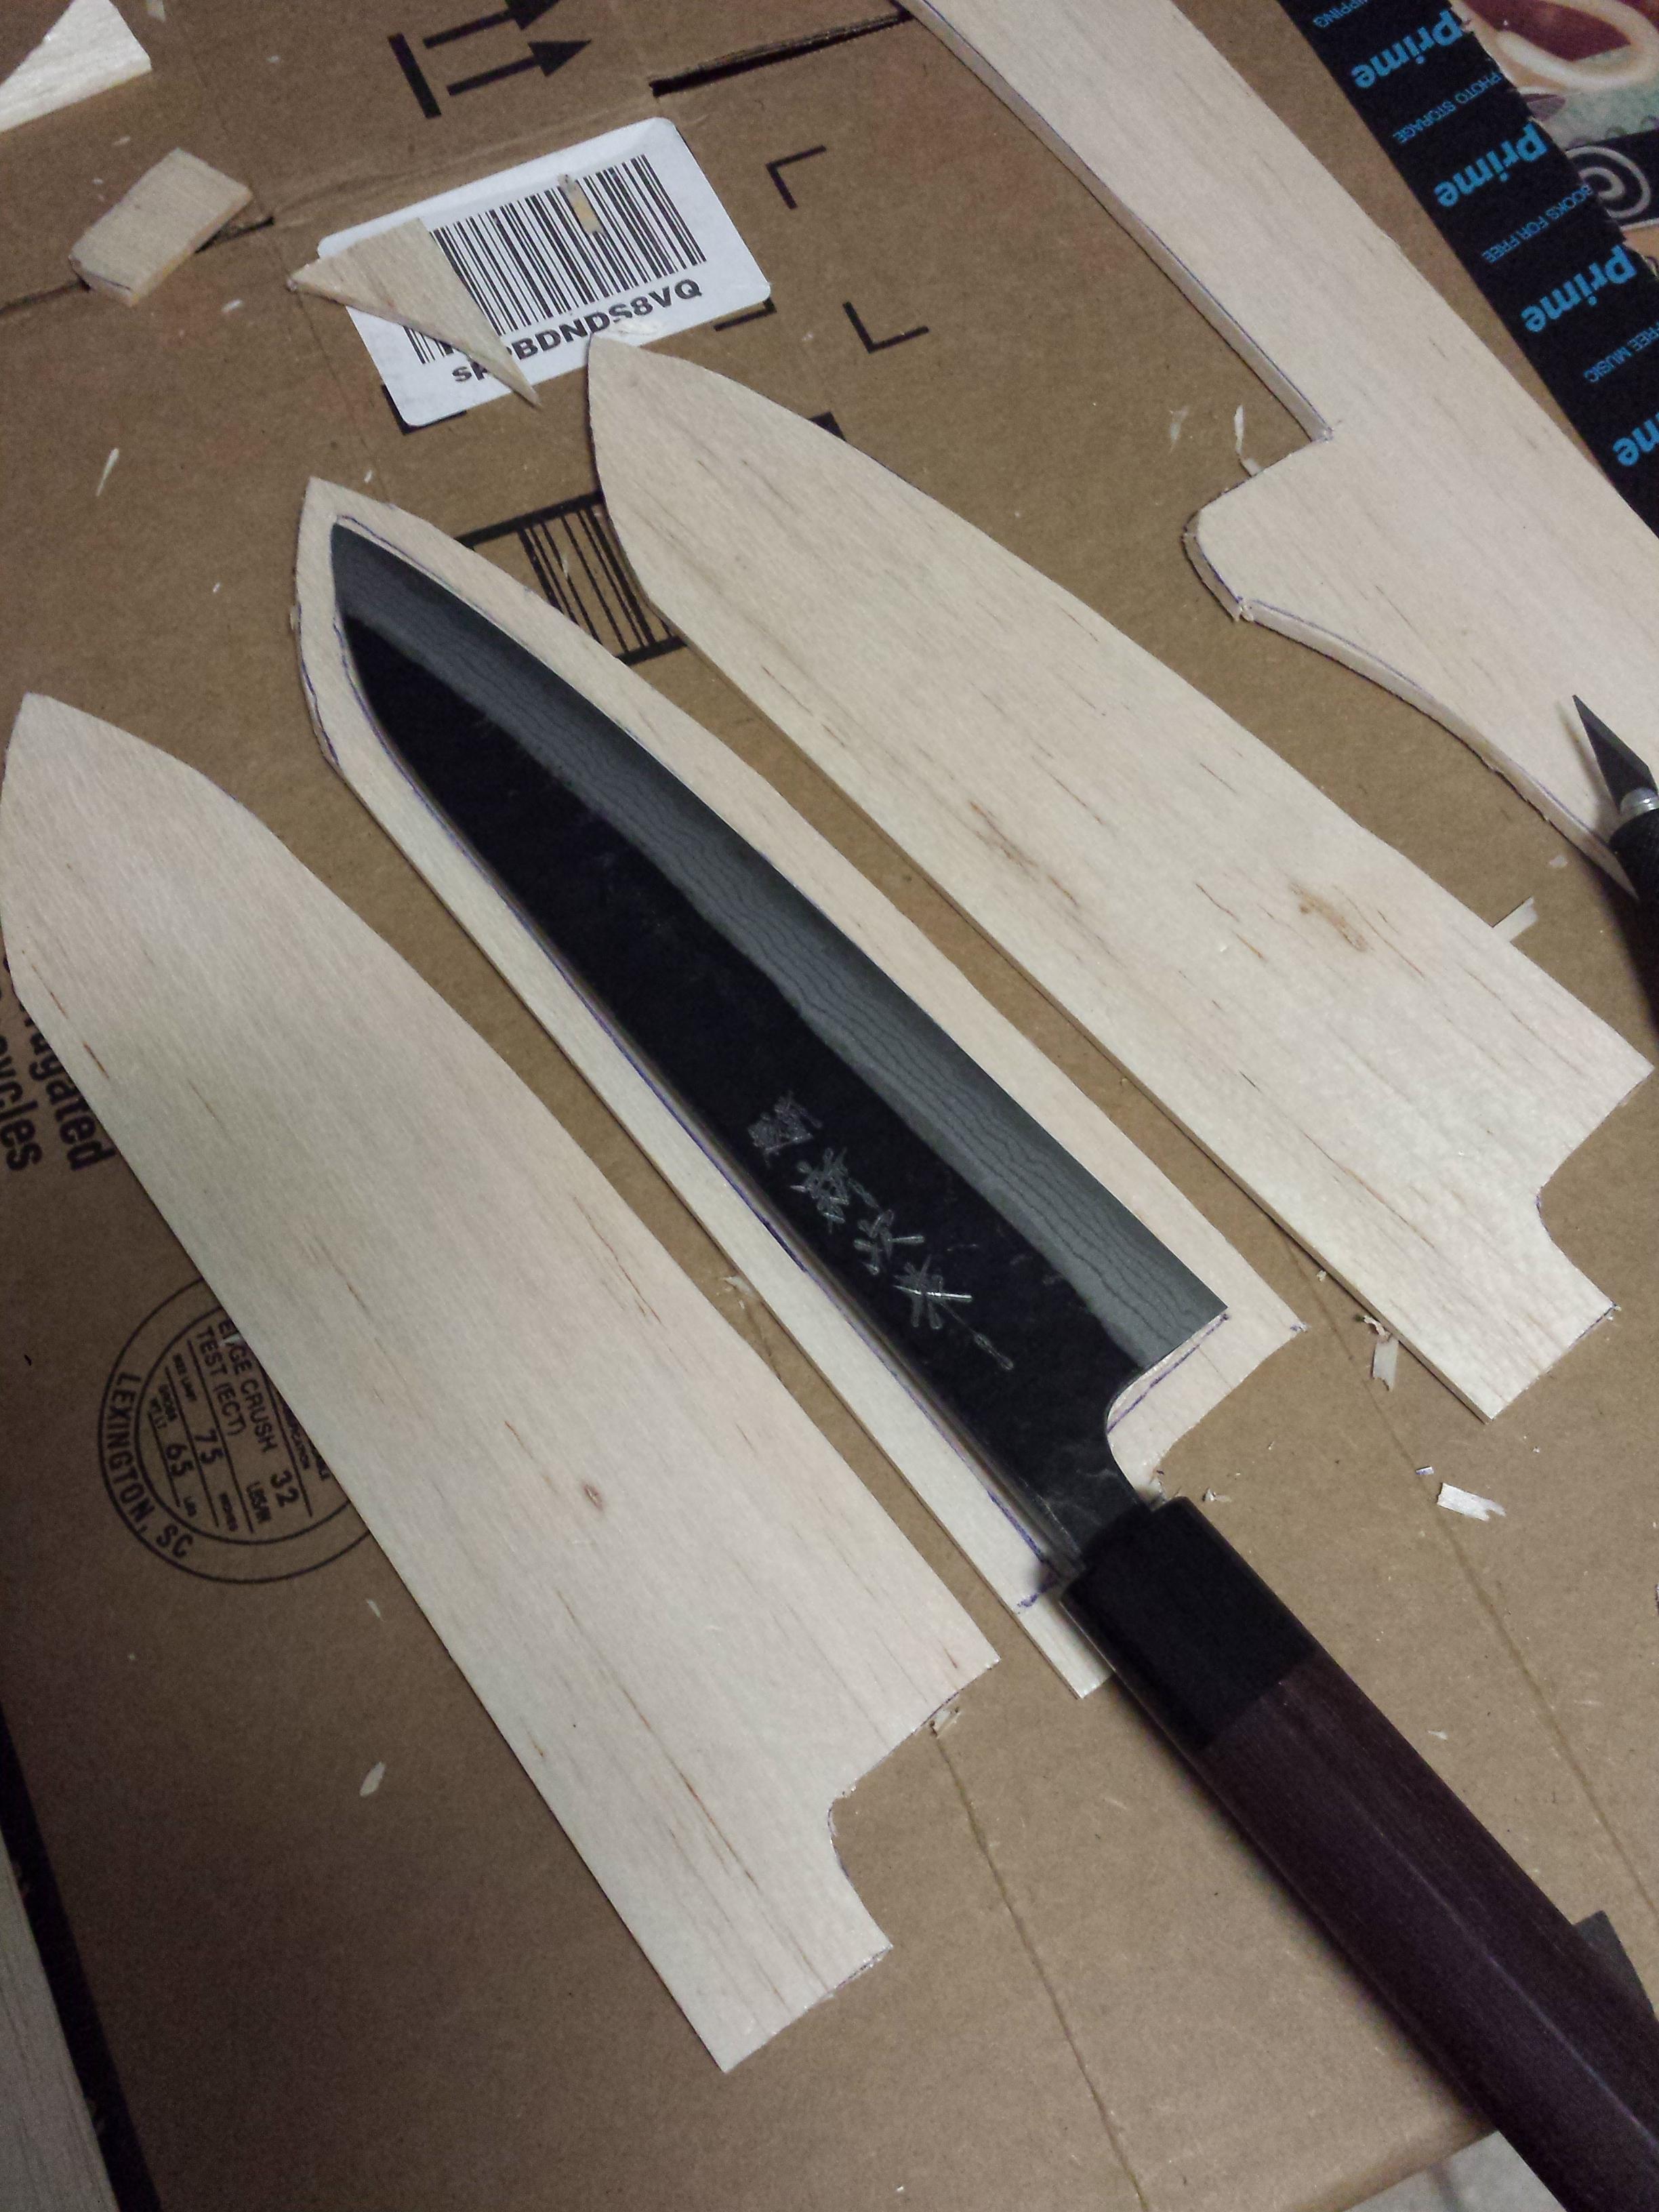 Easy DIY: A Knife Sheath Made from Balsa Wood